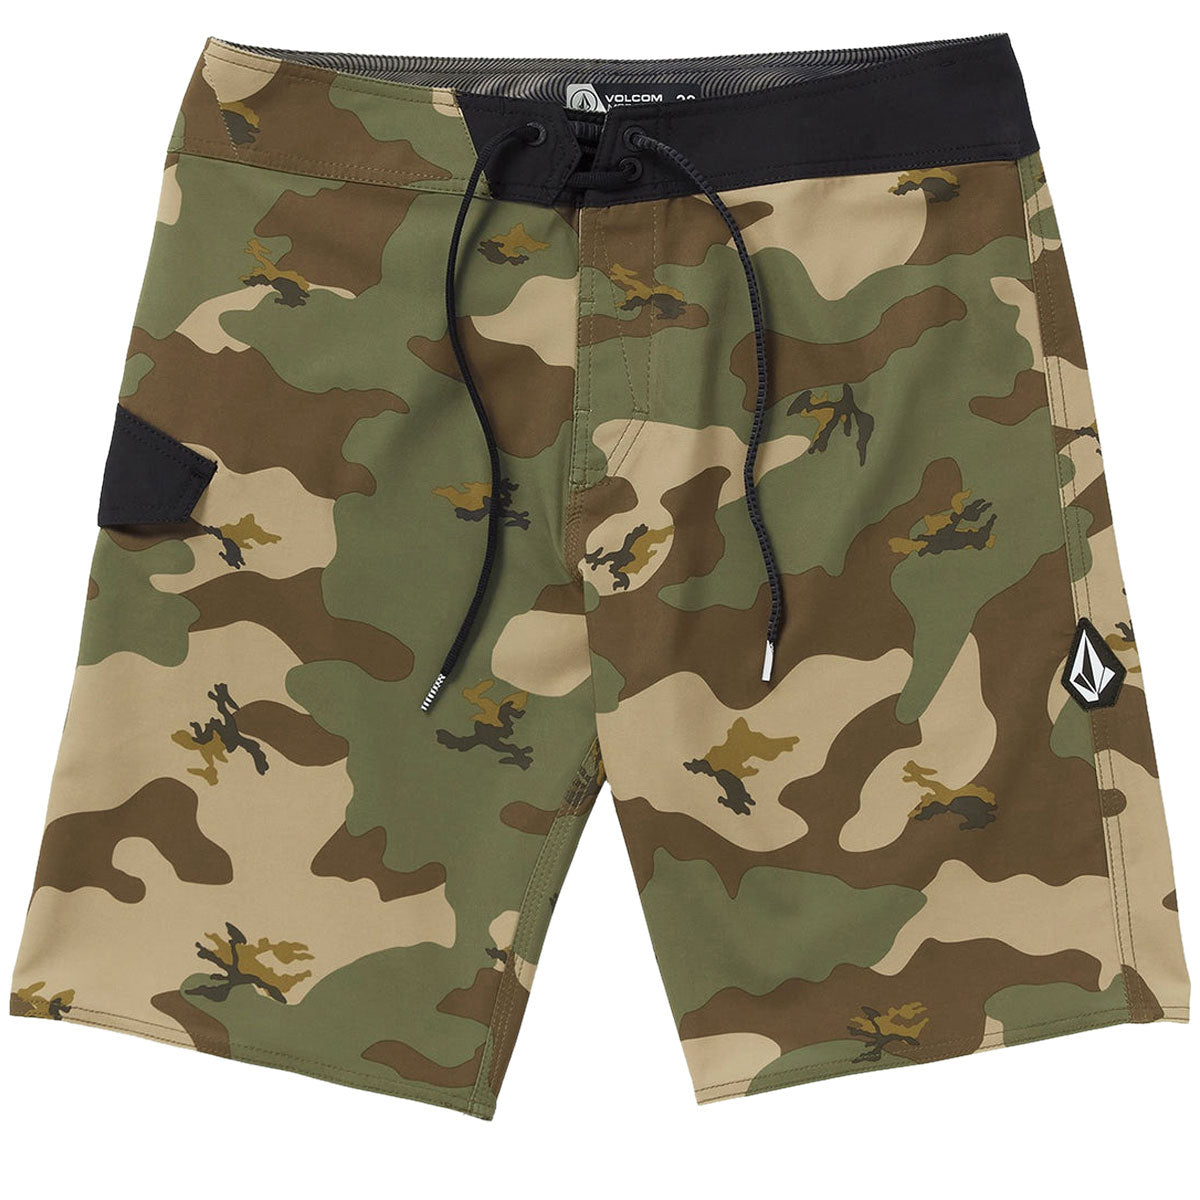 Volcom Lido Print Mod 20 Board Shorts - Camouflage image 1